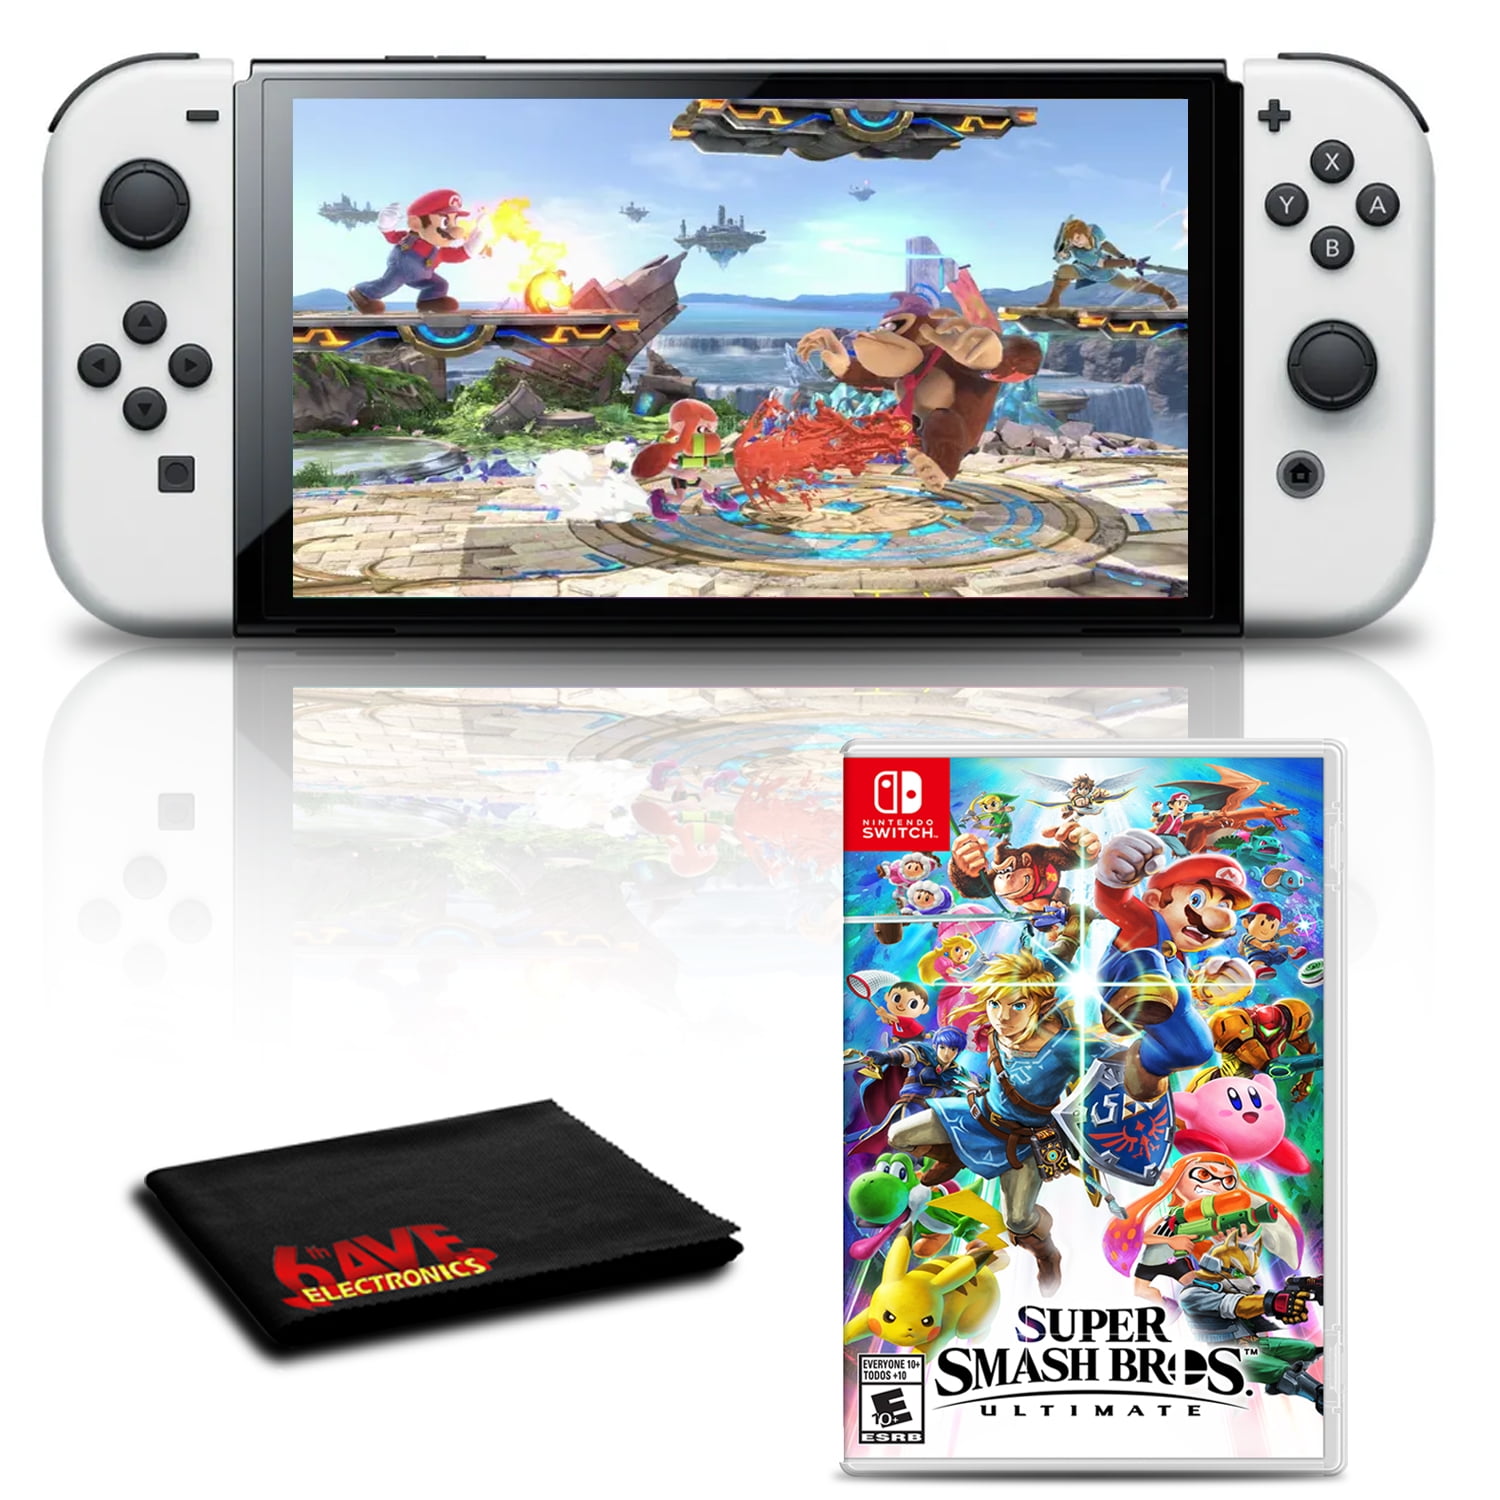 Super Smash Bros.™ Ultimate on Nintendo Switch – United States Dollar